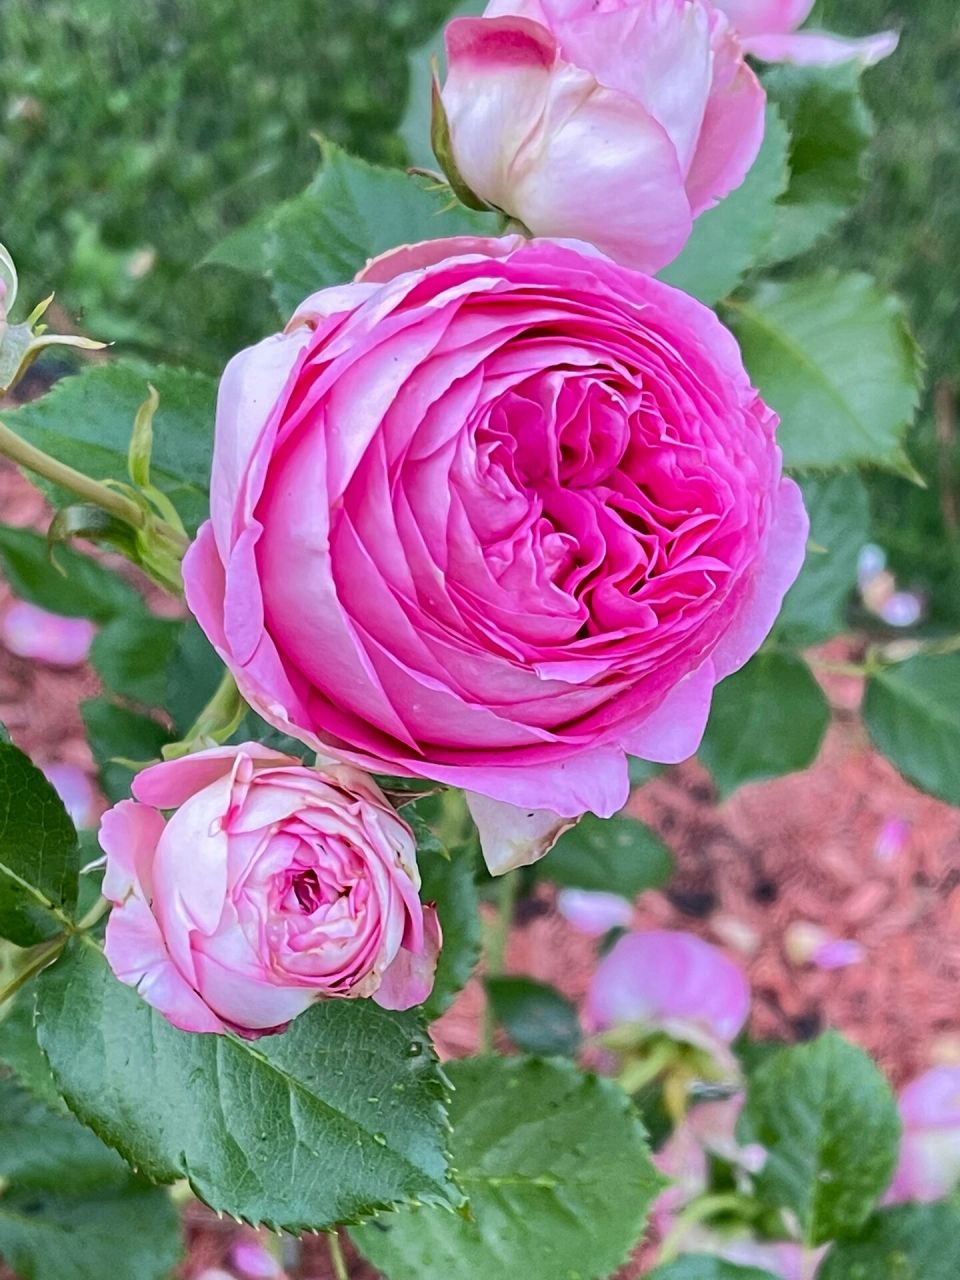 eden 龙沙宝石是市场上最受欢迎的藤本月季品种之一,粉龙开粉色花朵